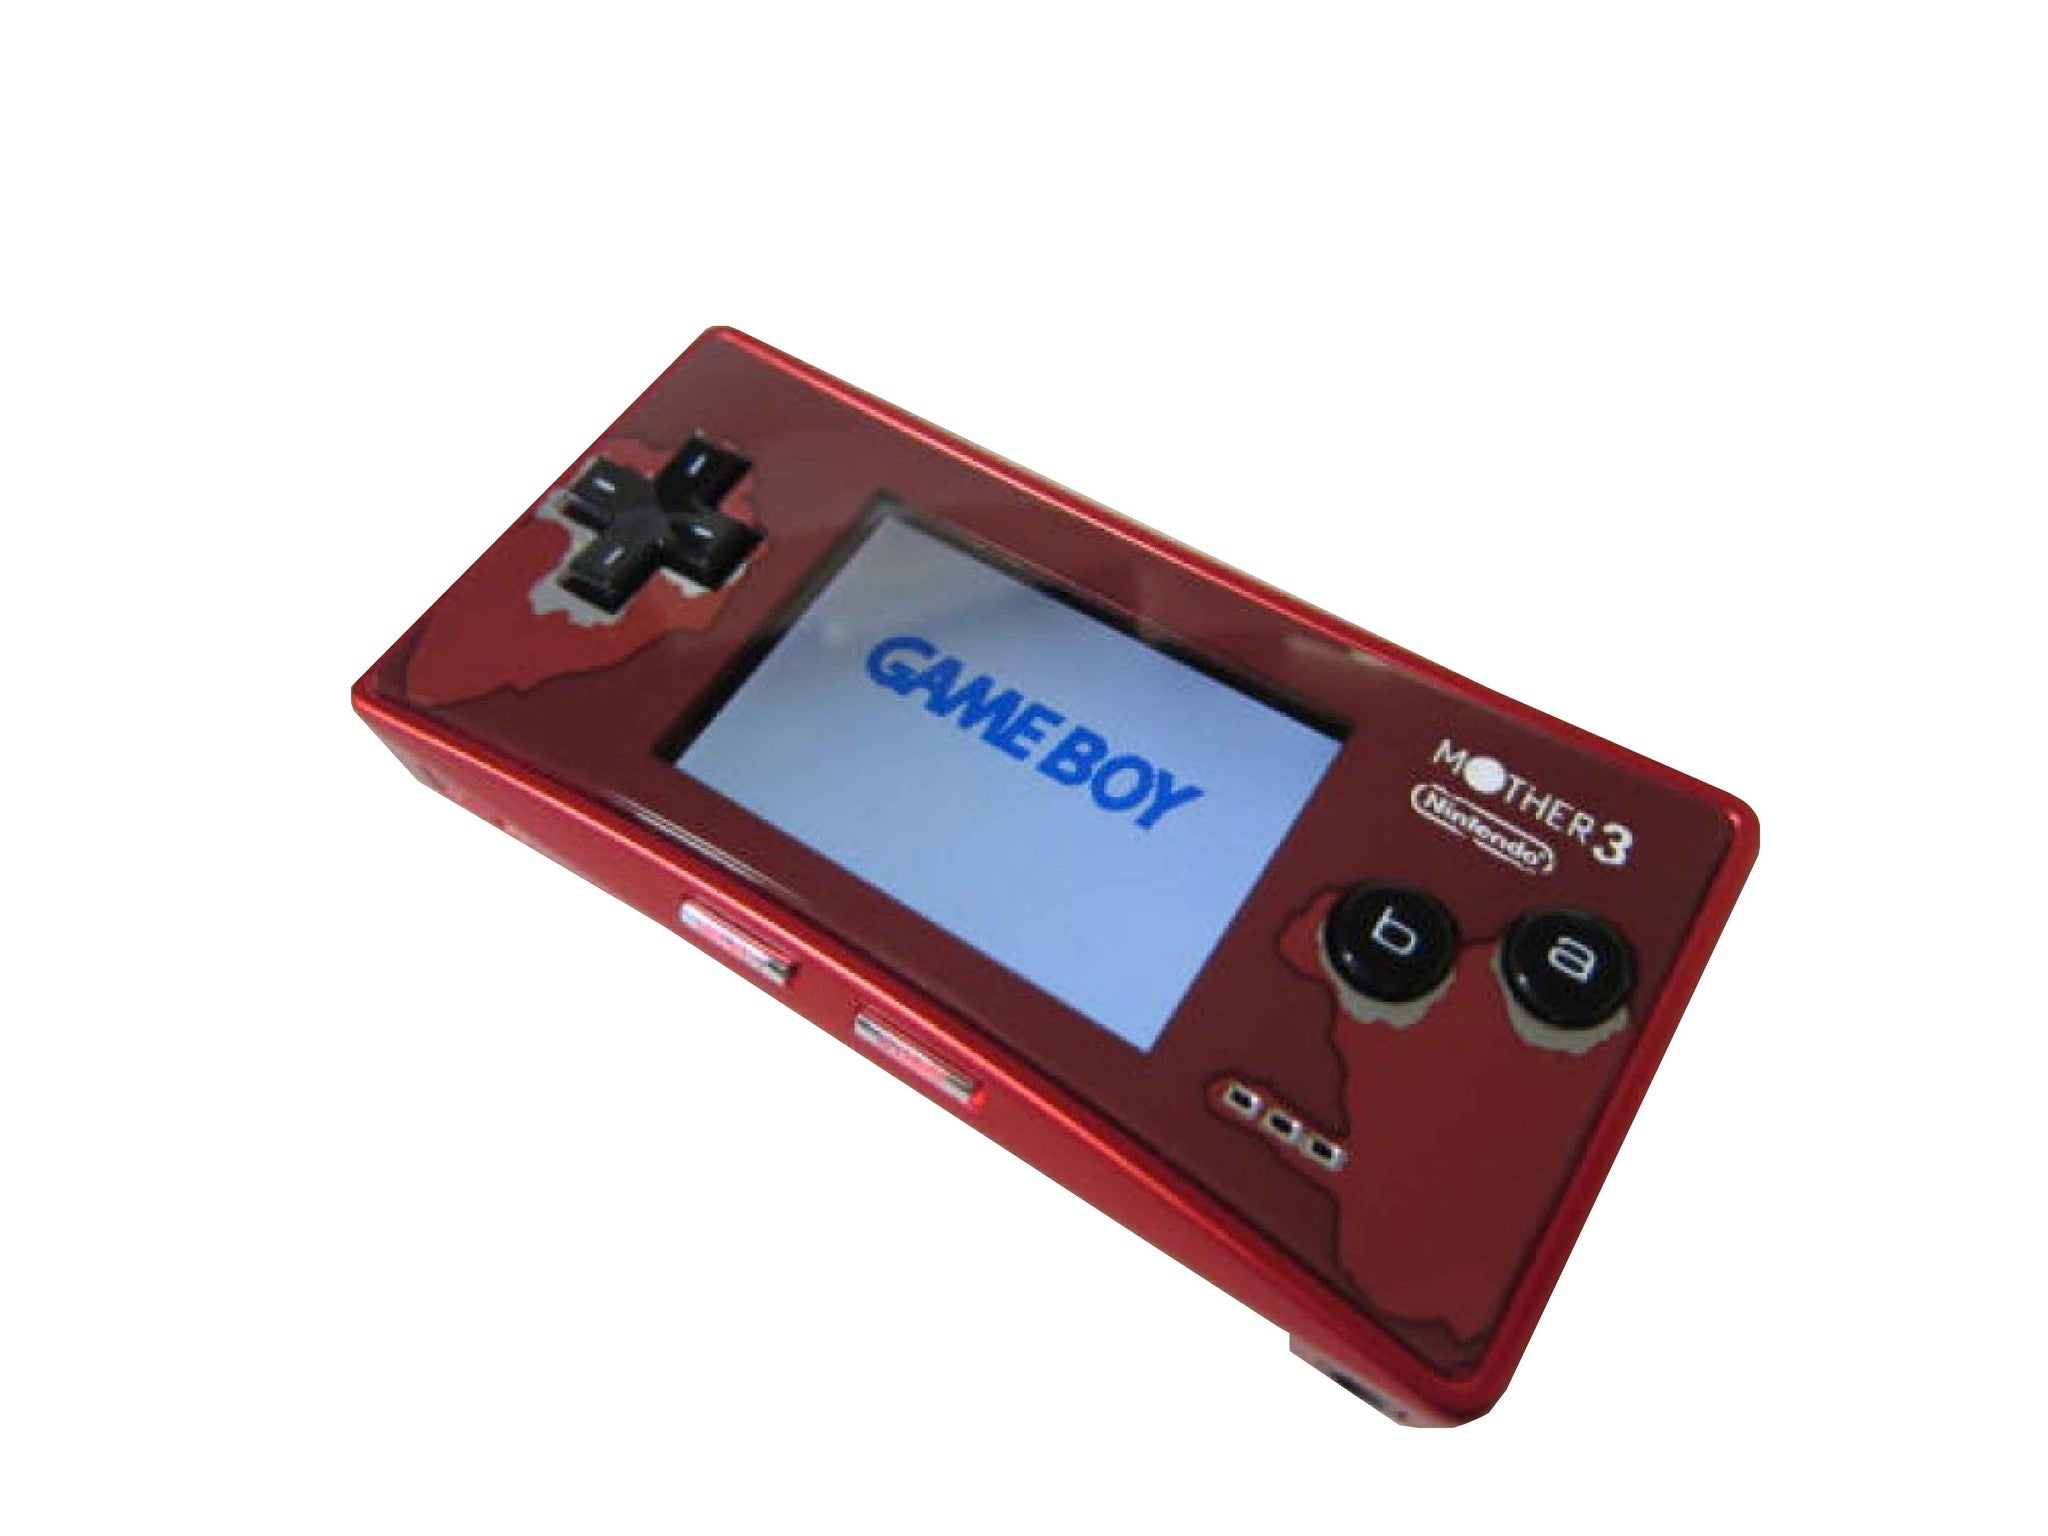 Nintendo Game Boy Micro - Mother 3 Retropixl Retrogaming retro gaming Rare Console Collector Limited Edition Japan Import